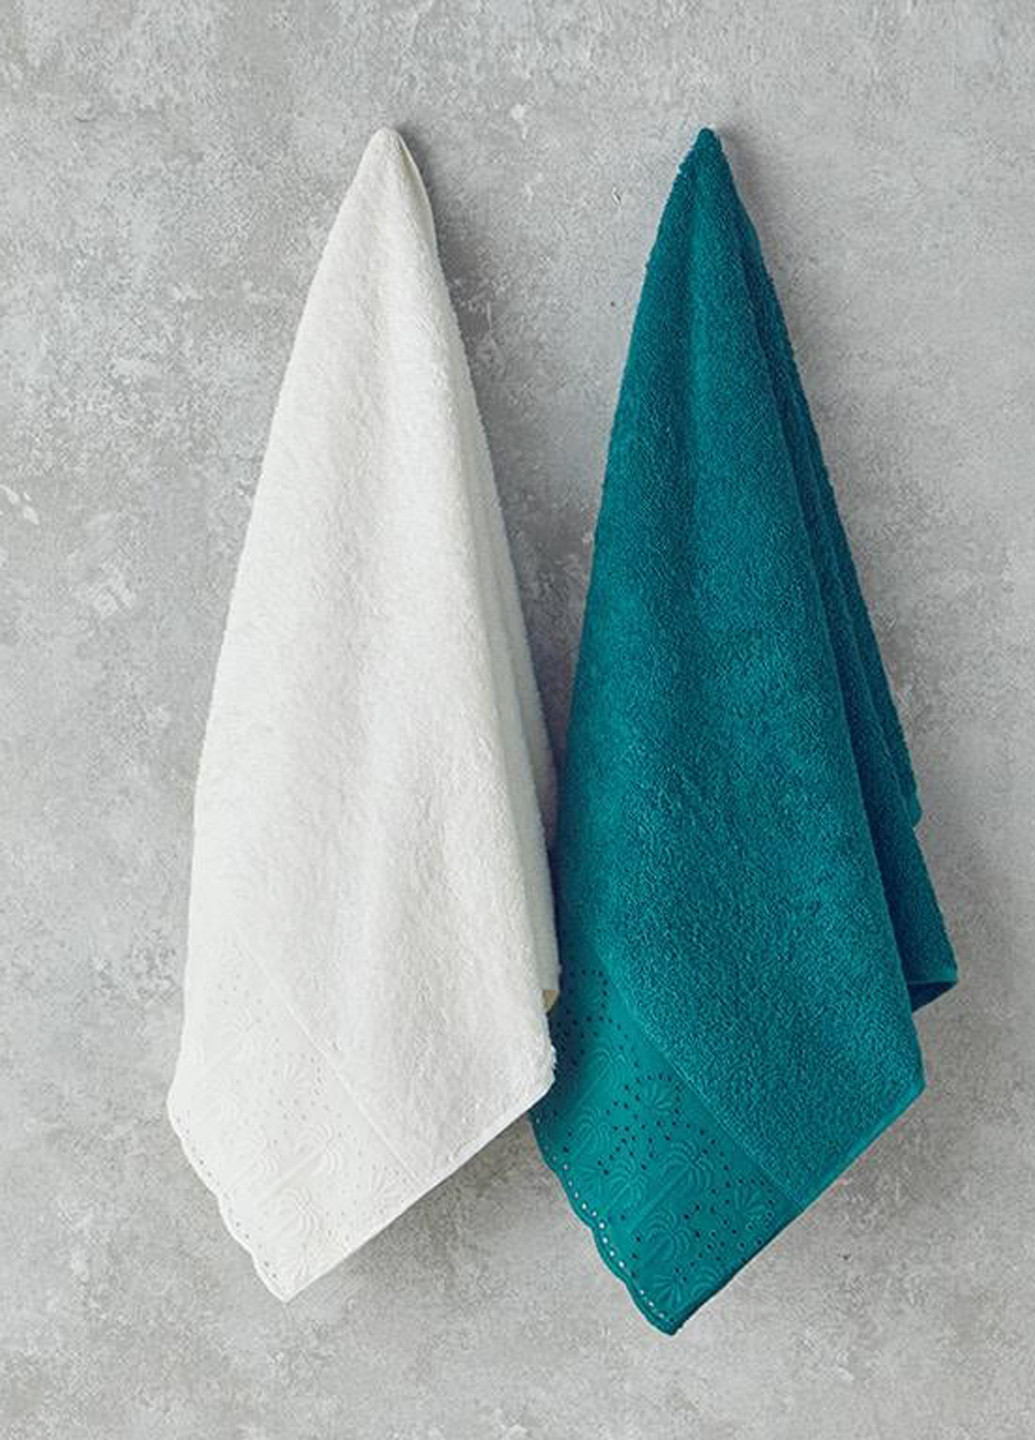 English Home полотенце для лица, 50х80 см однотонный зеленый производство - Турция